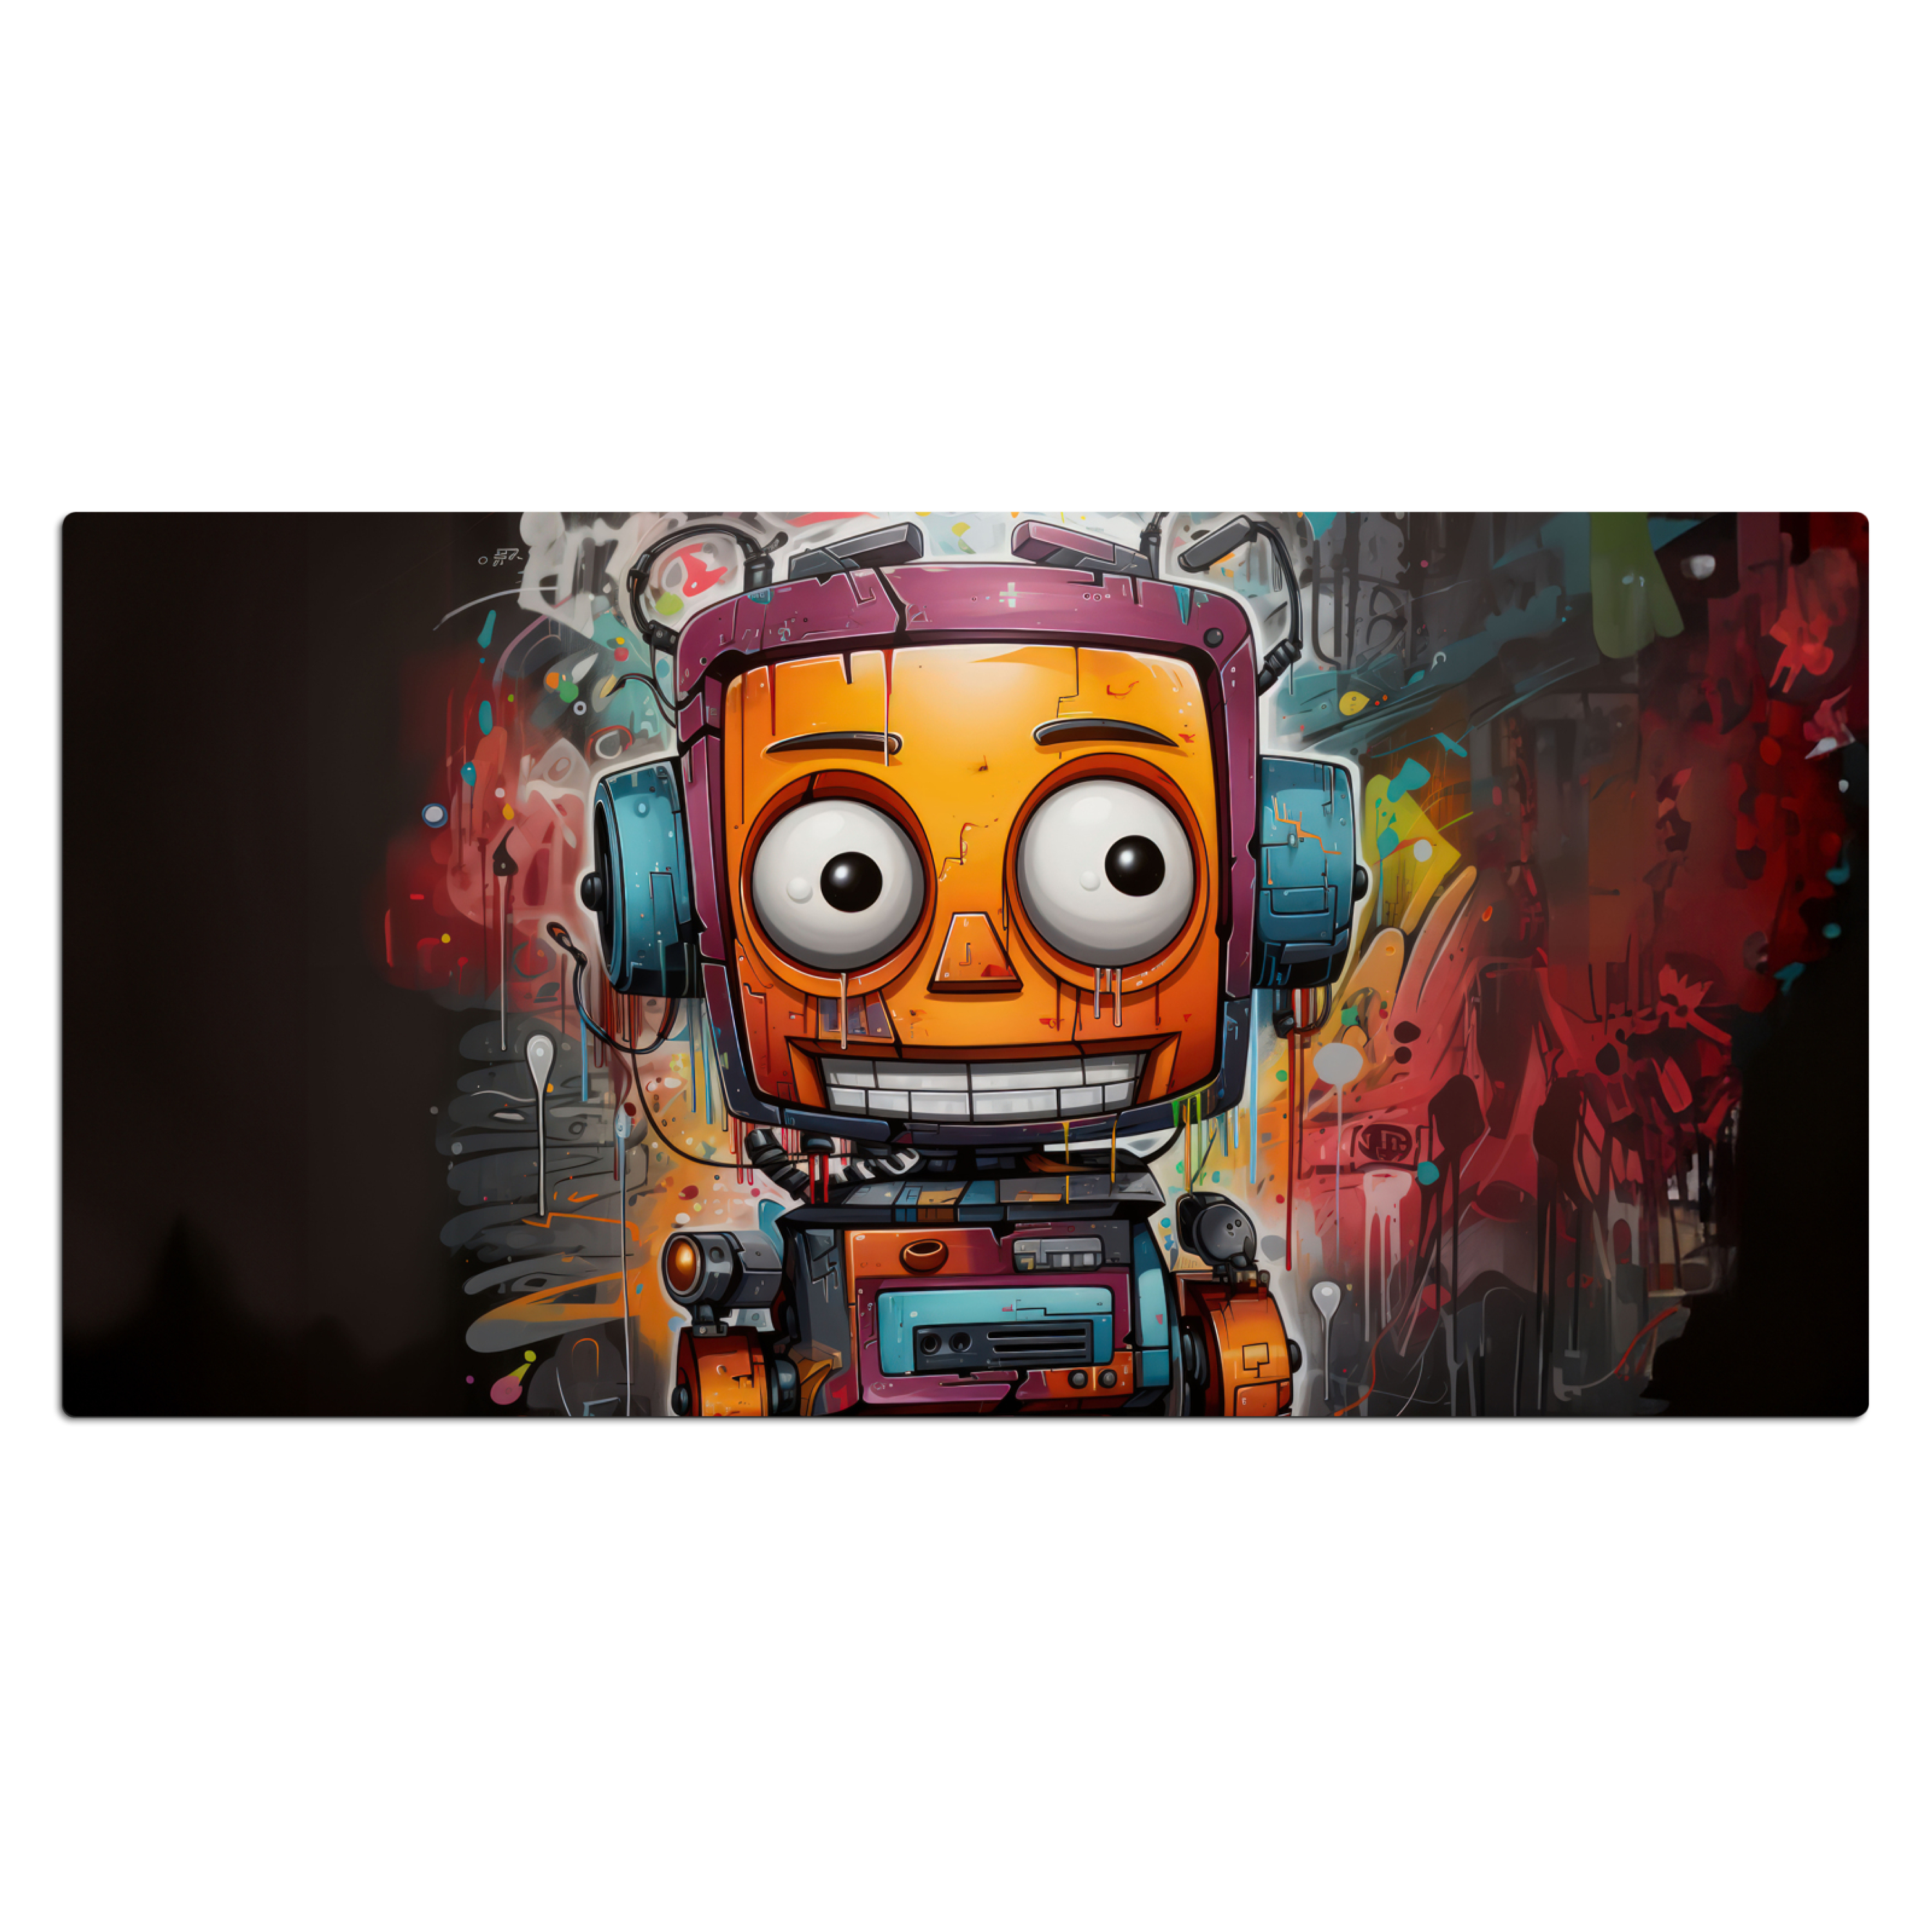 Bureau onderlegger - Robot - Graffiti - Oranje - Kleuren